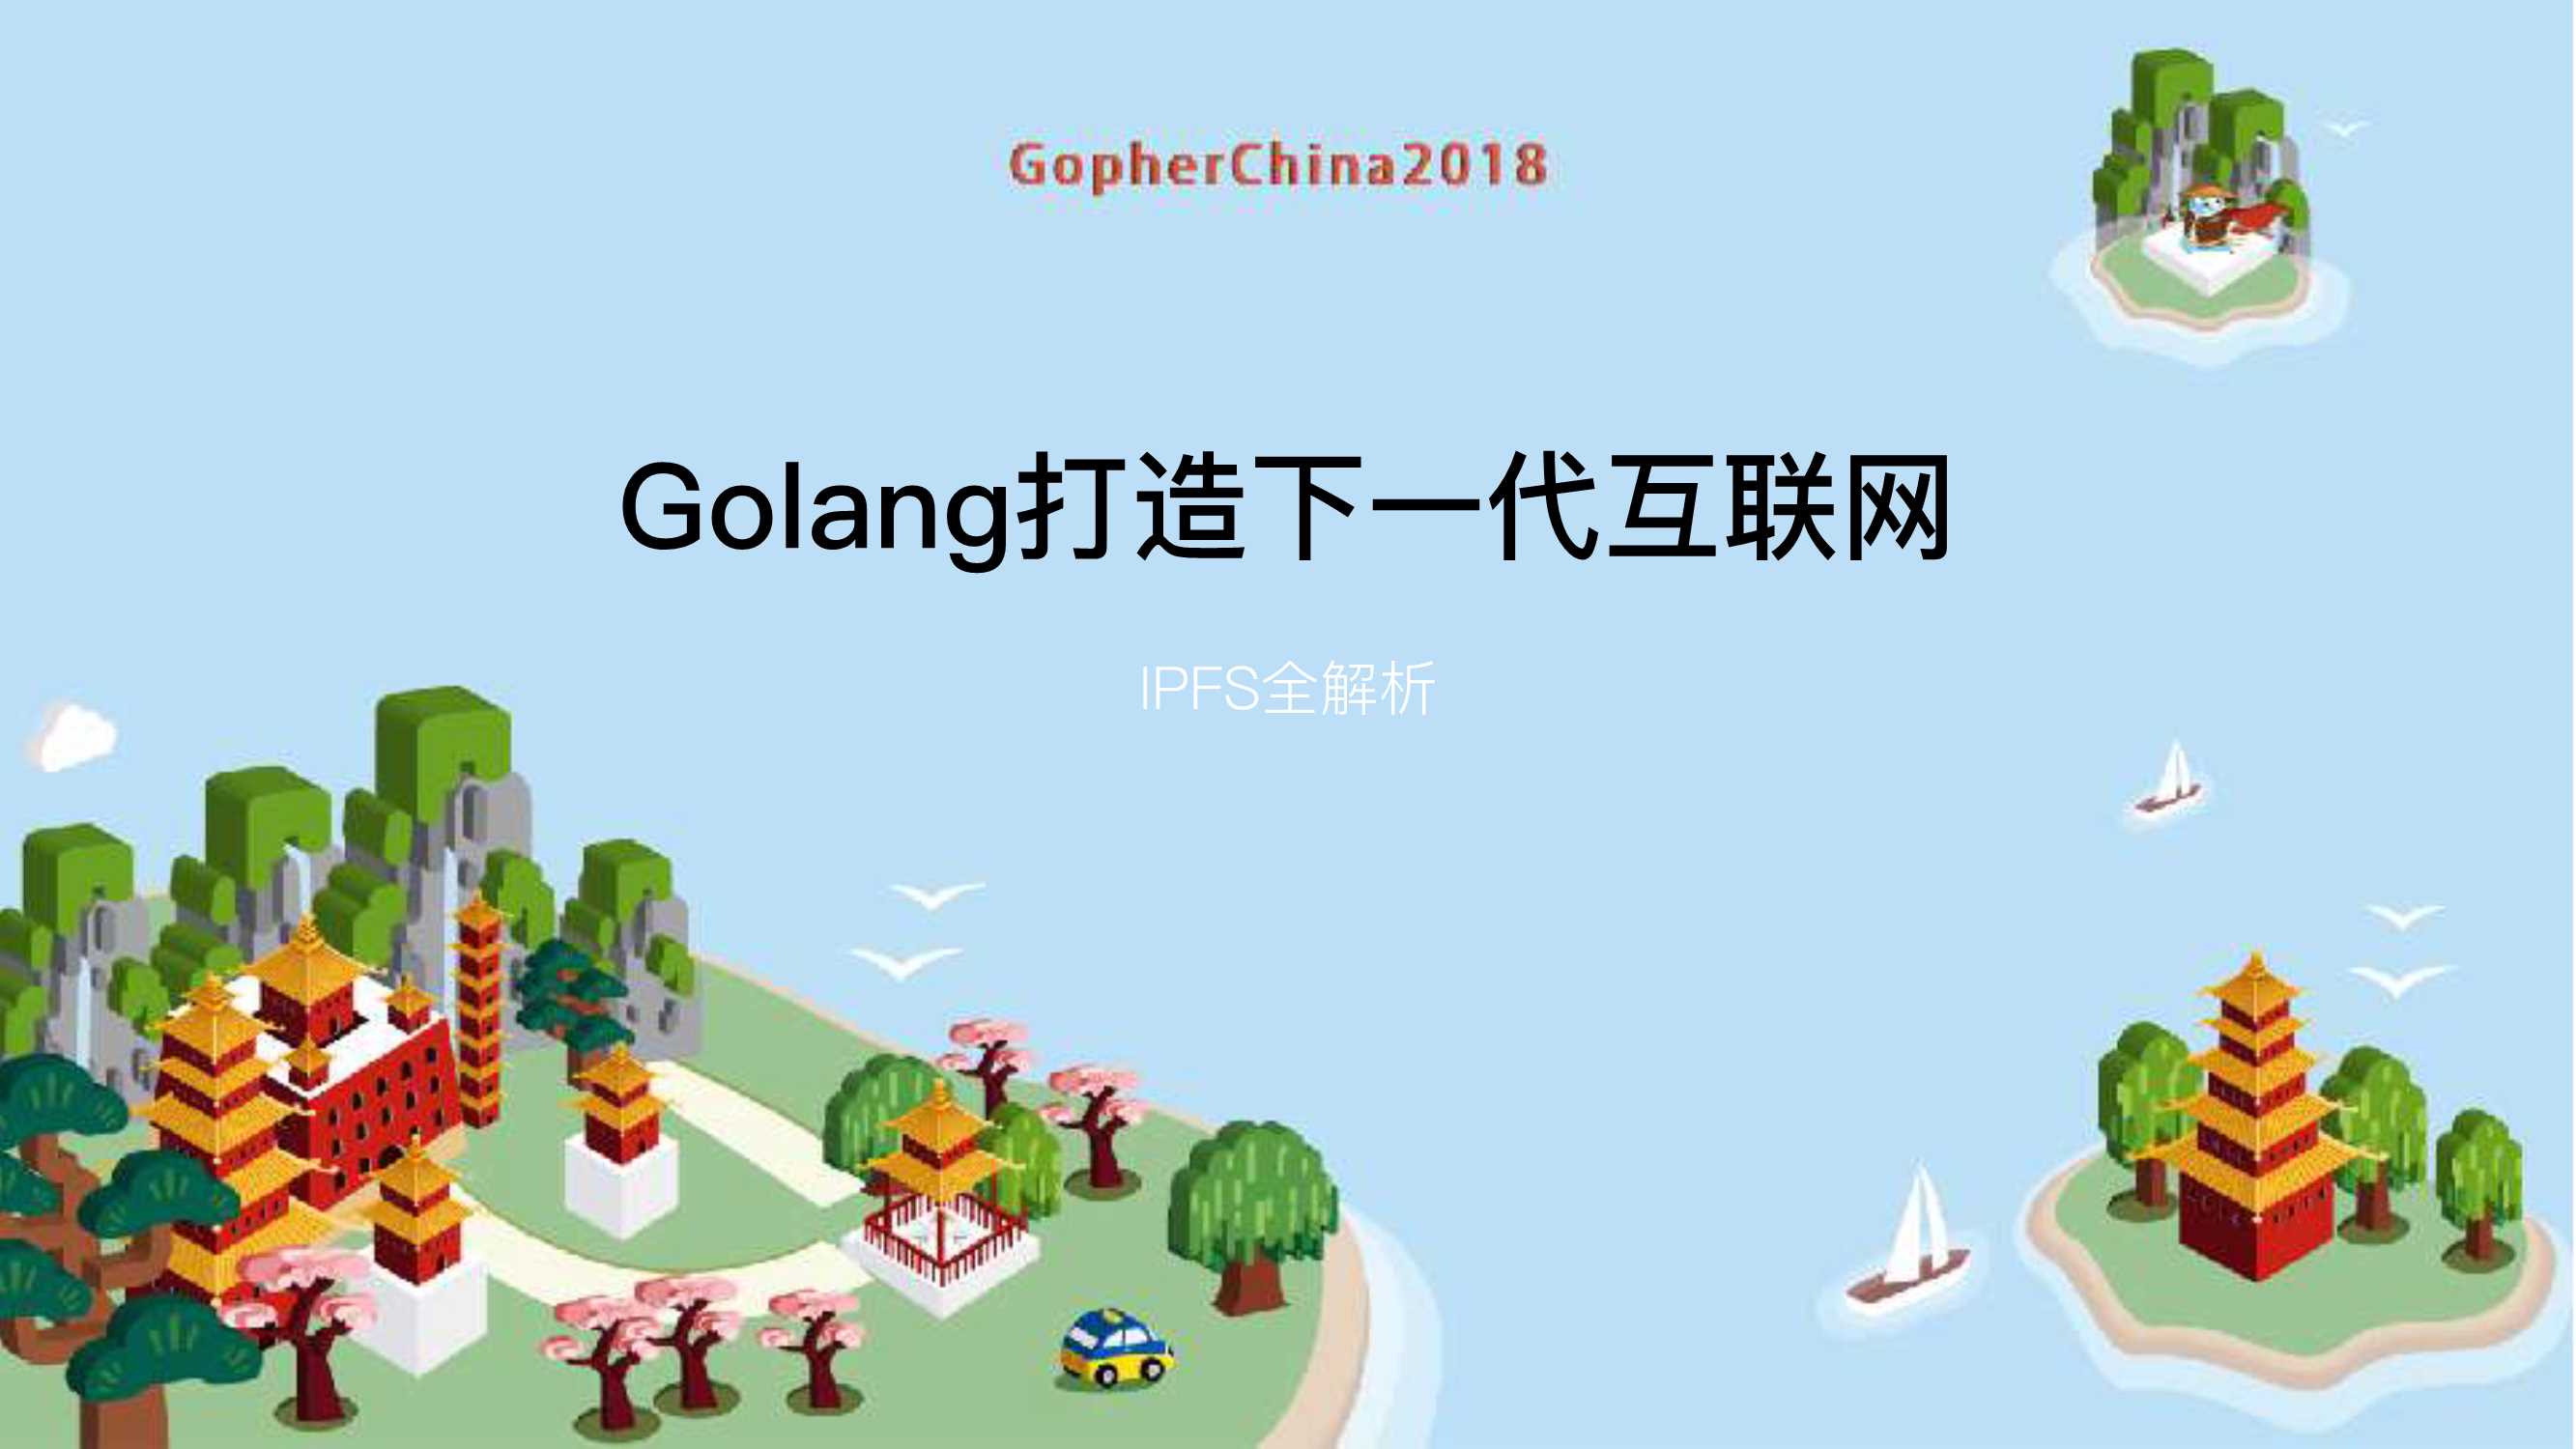 Golang打造下一代互联网-IPFS全解析-2018-21页